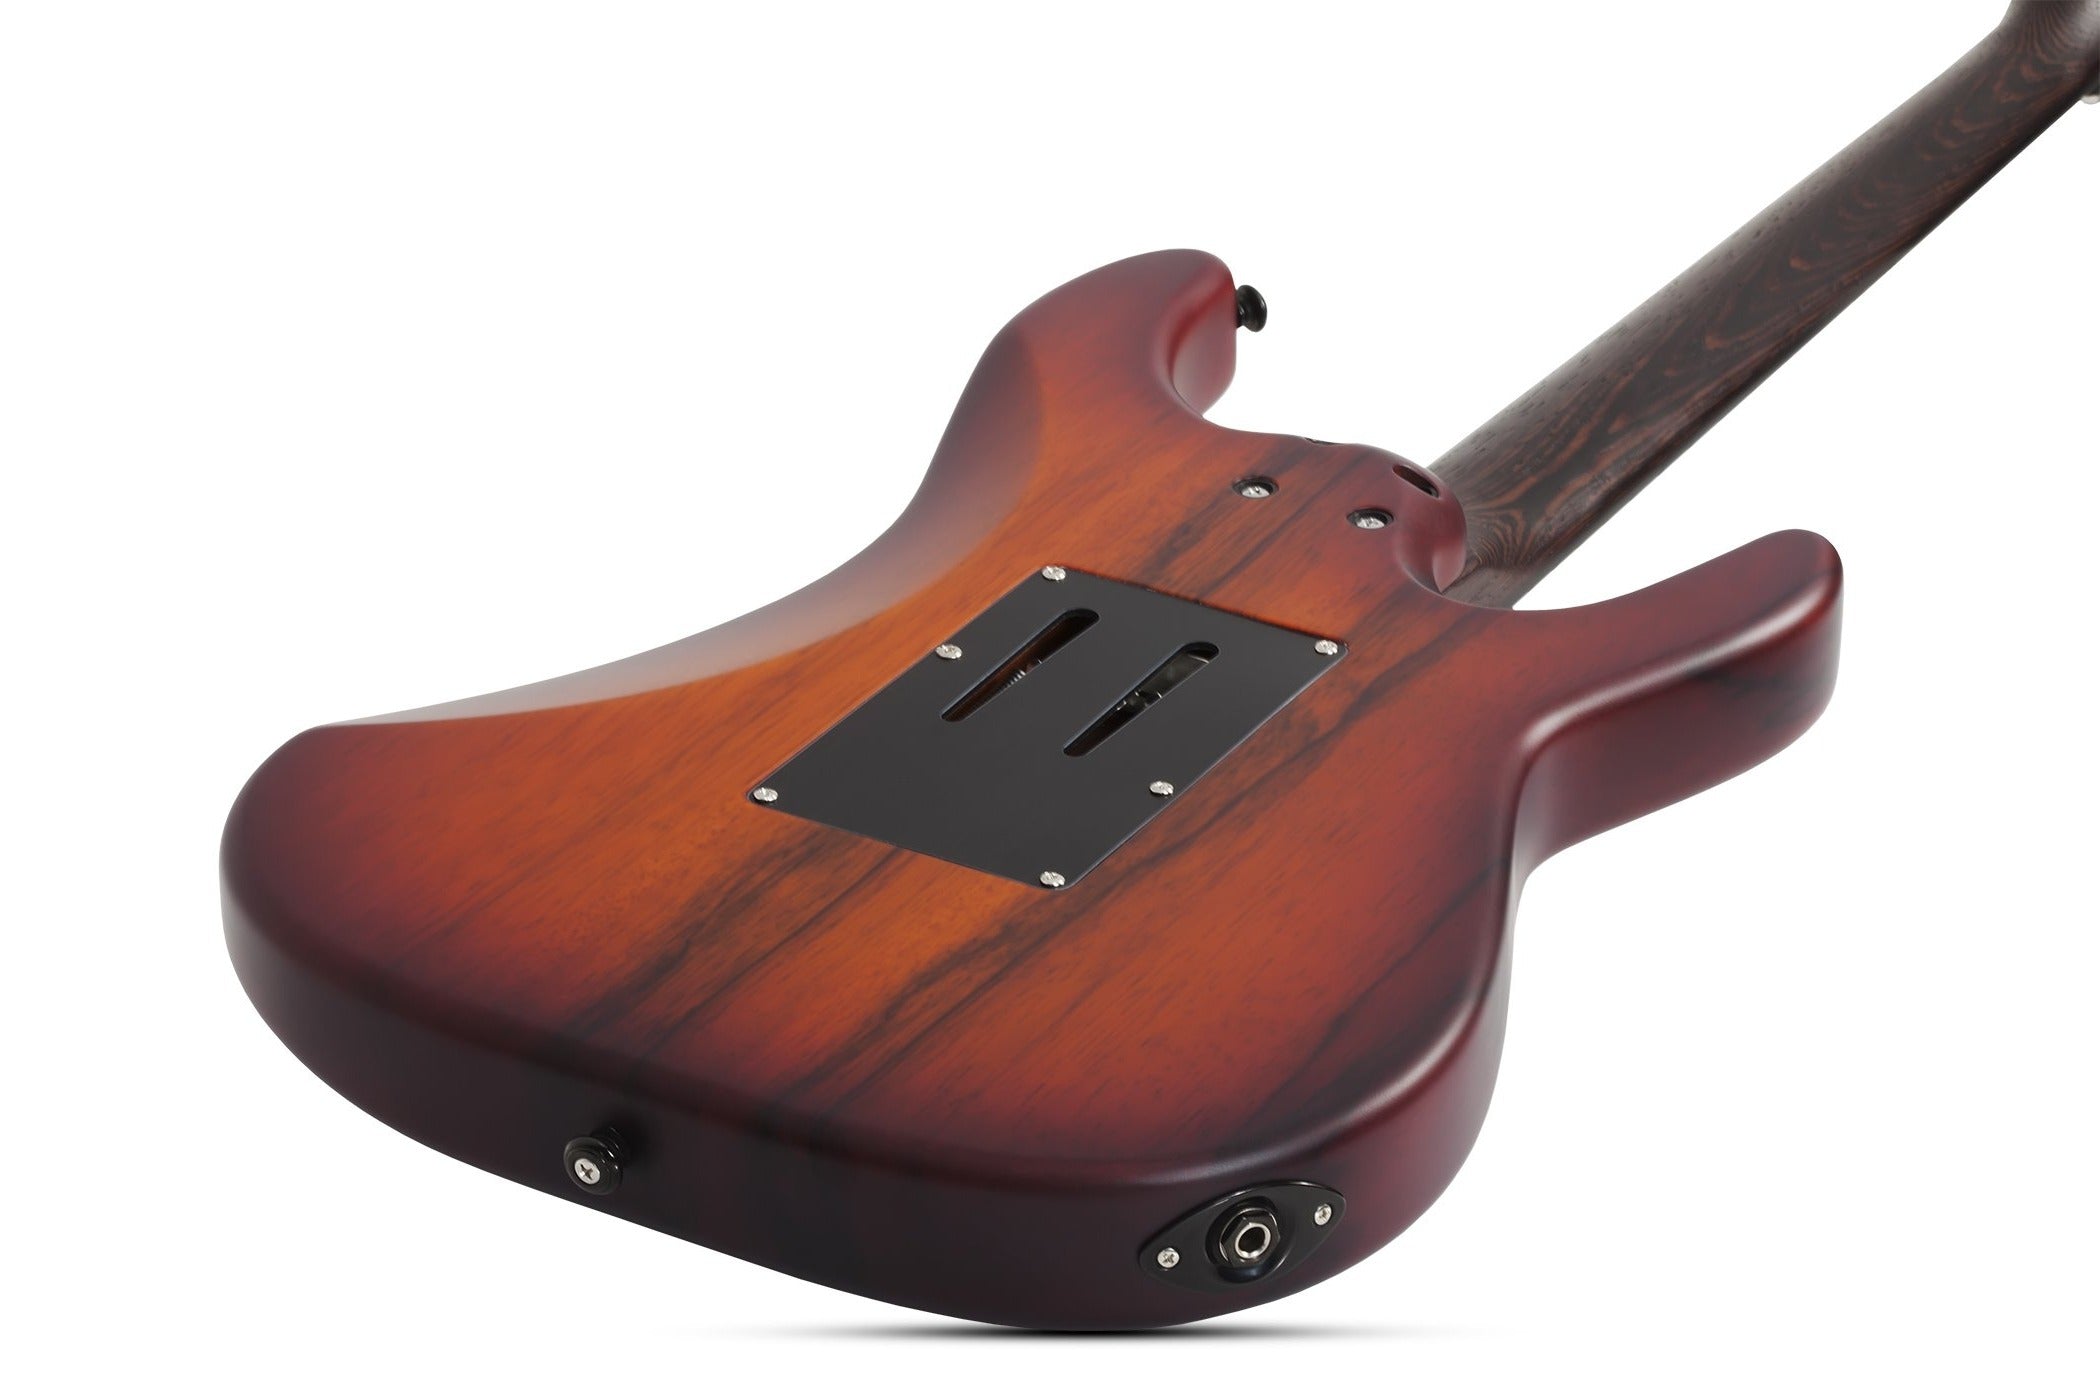 Schecter Sun Valley Super Shredder Exotic Ziricote Left Handed Electric Guitar, Black Limba 1268-SHC